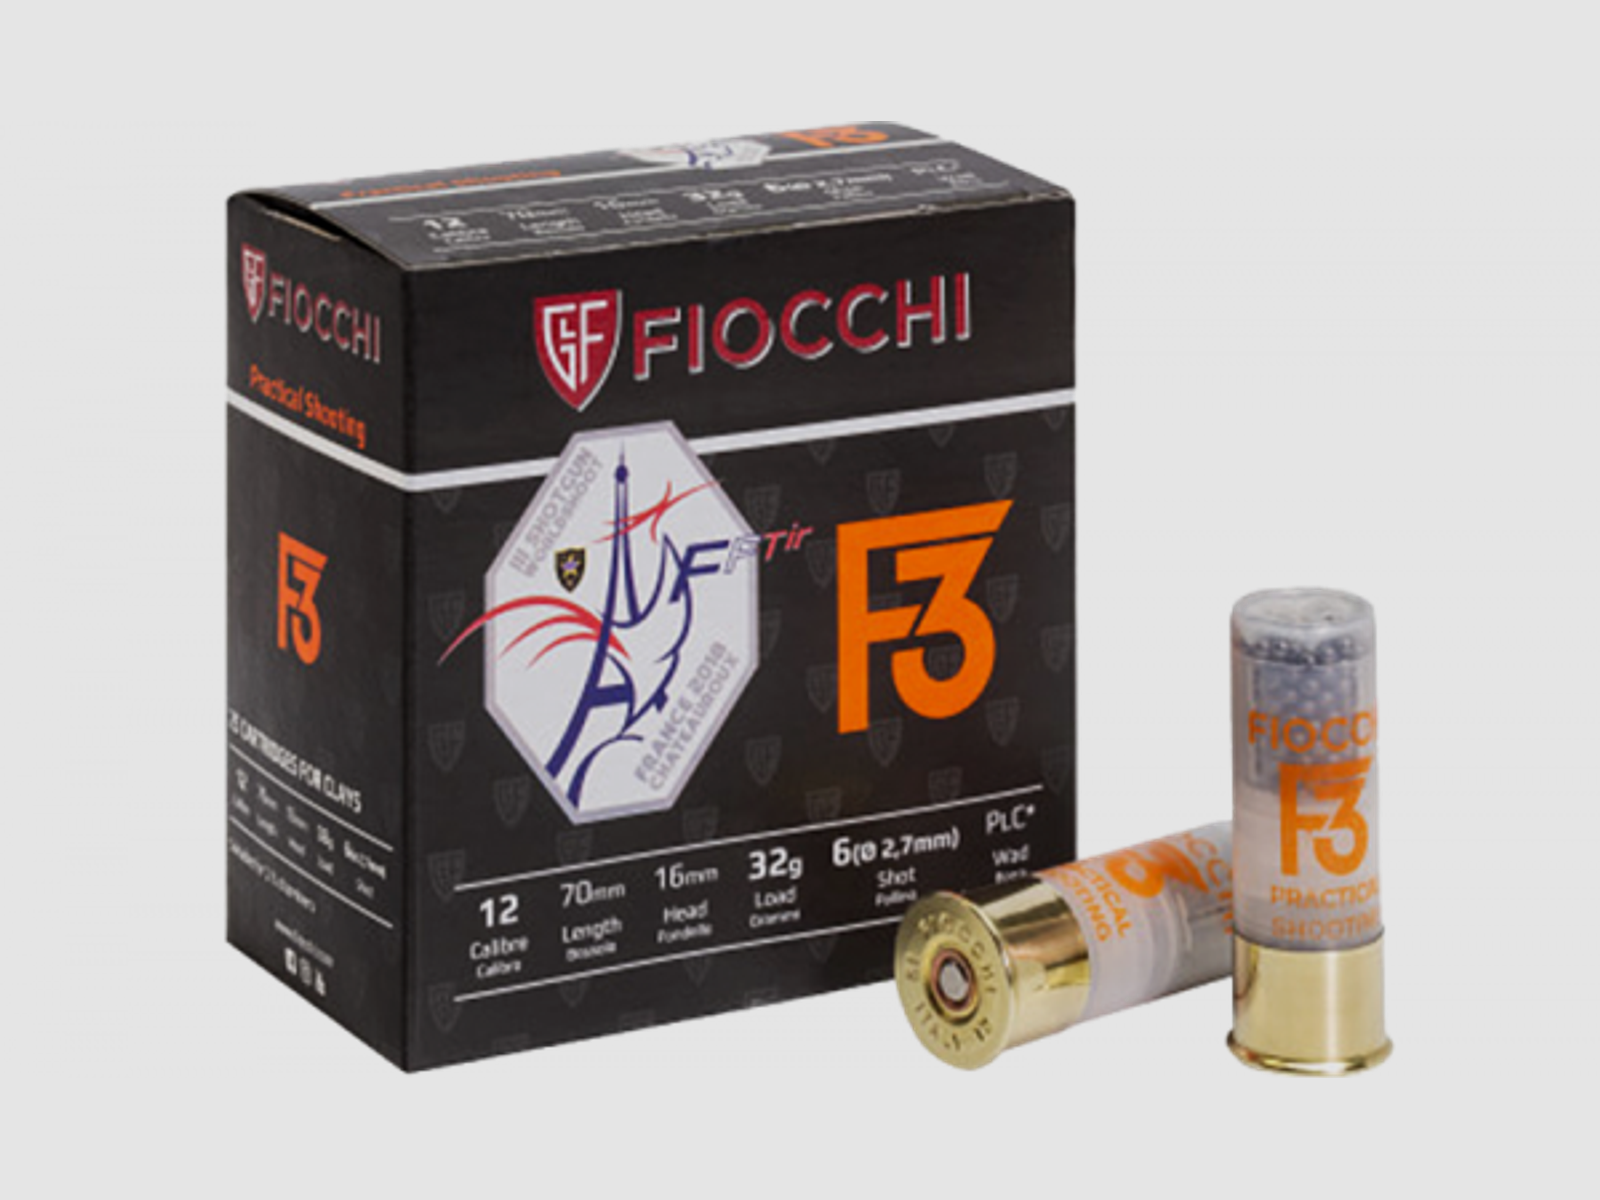 Fiocchi F3 Practical Shooting 12/70 32 gr Schrotpatronen